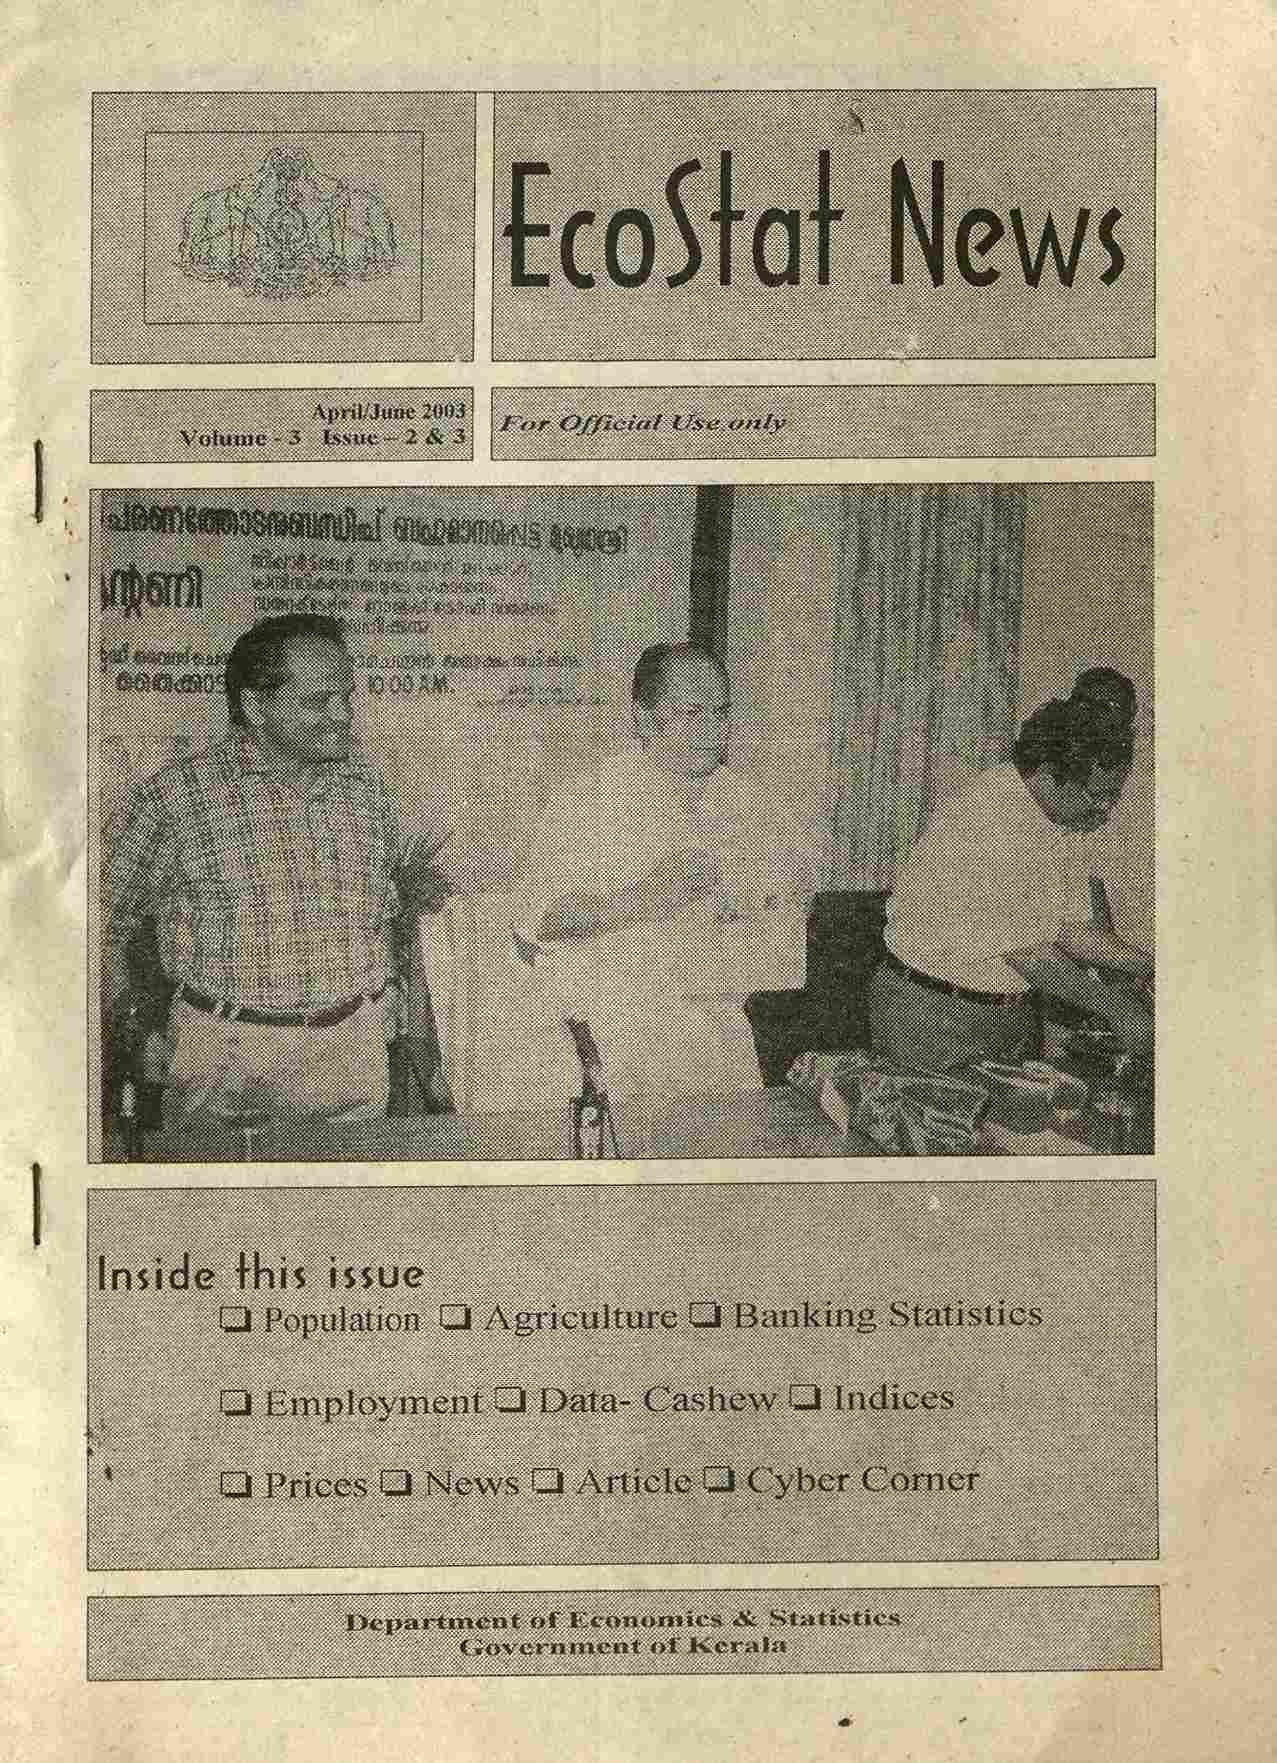 Ecostat News April-June 2003 Volume 3 Issue 2&3